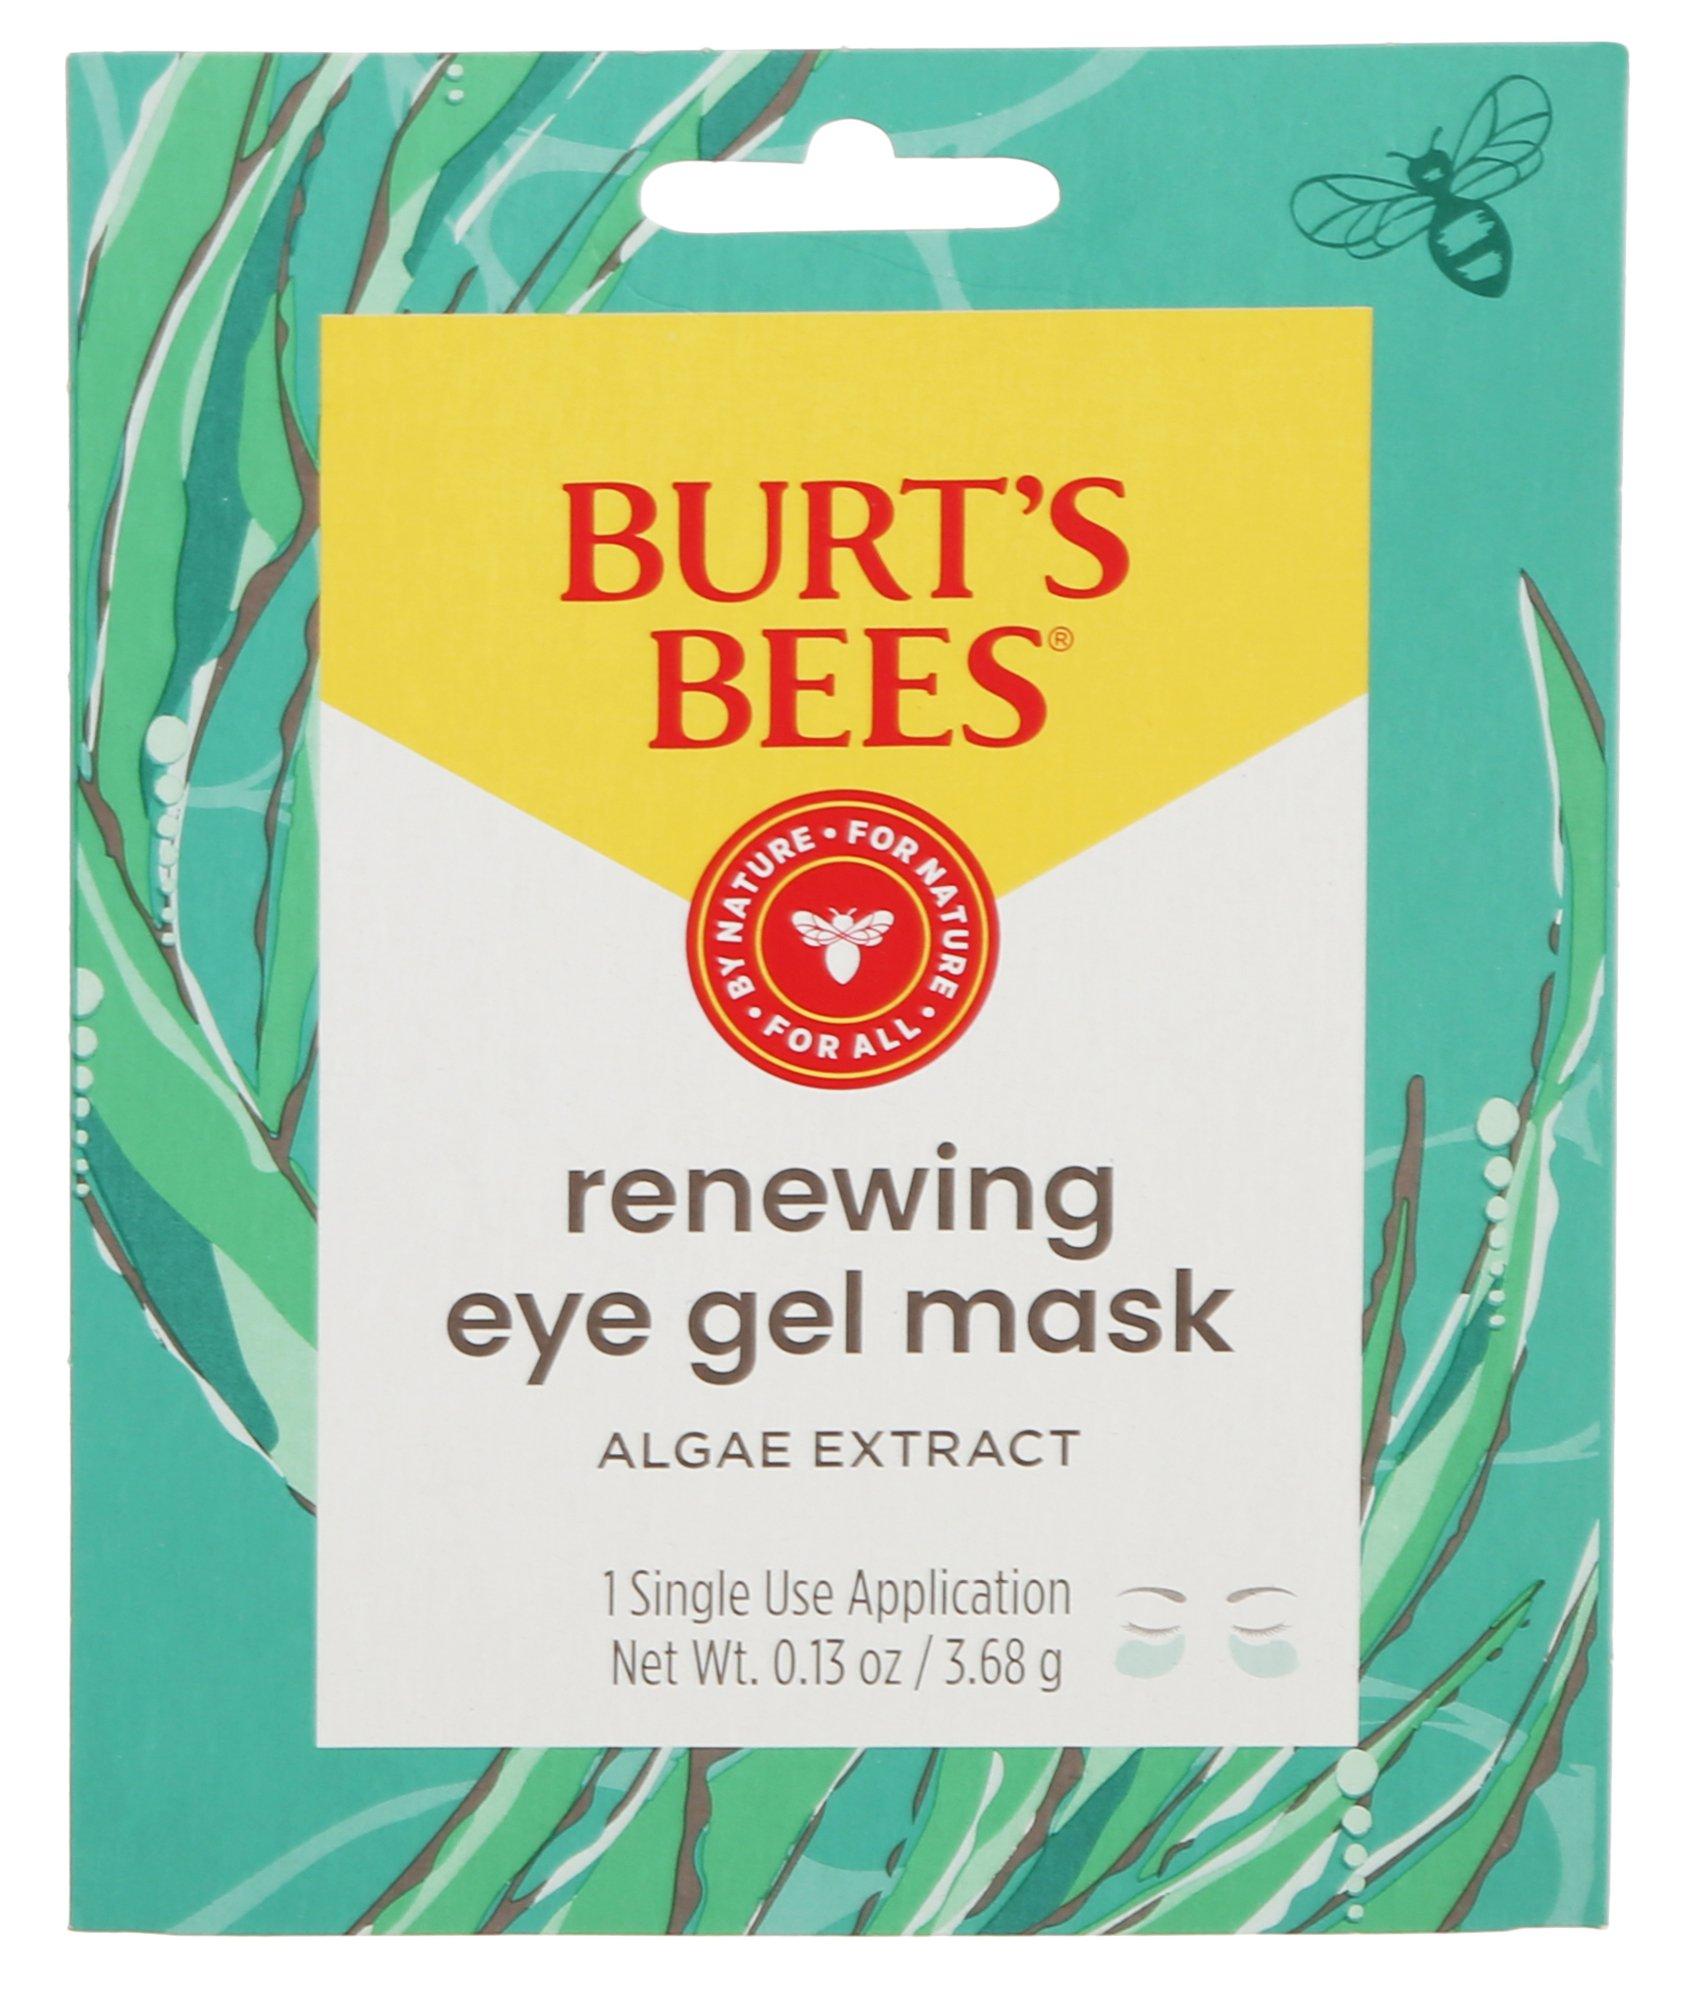 Burt's Bees Renewing Algae Extract Eye Mask